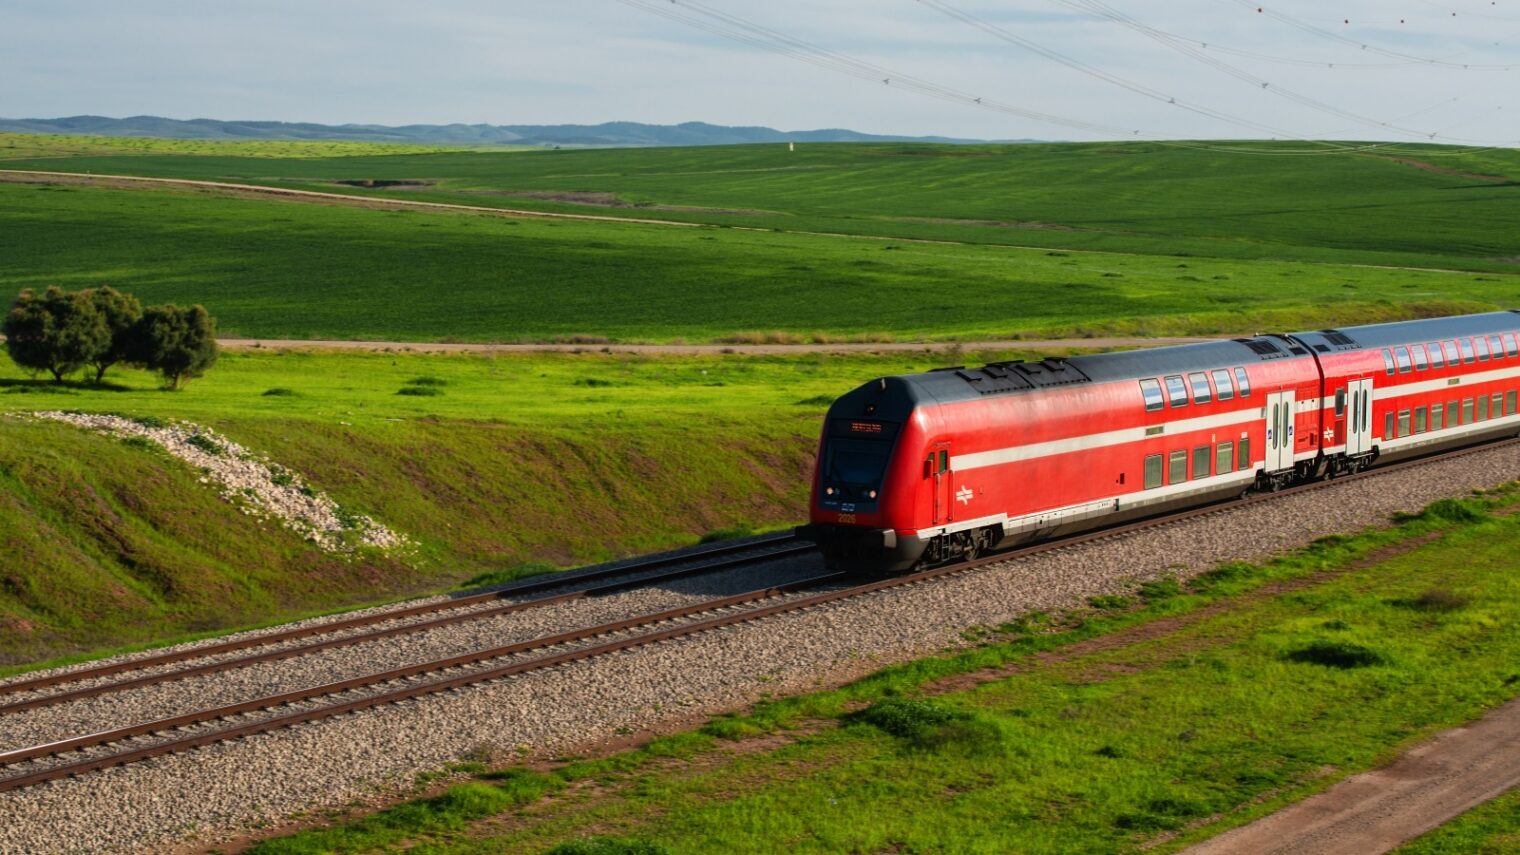 A train traveling on Israel Railways. Photo by Yuriy Chertok via Shutterstock.com